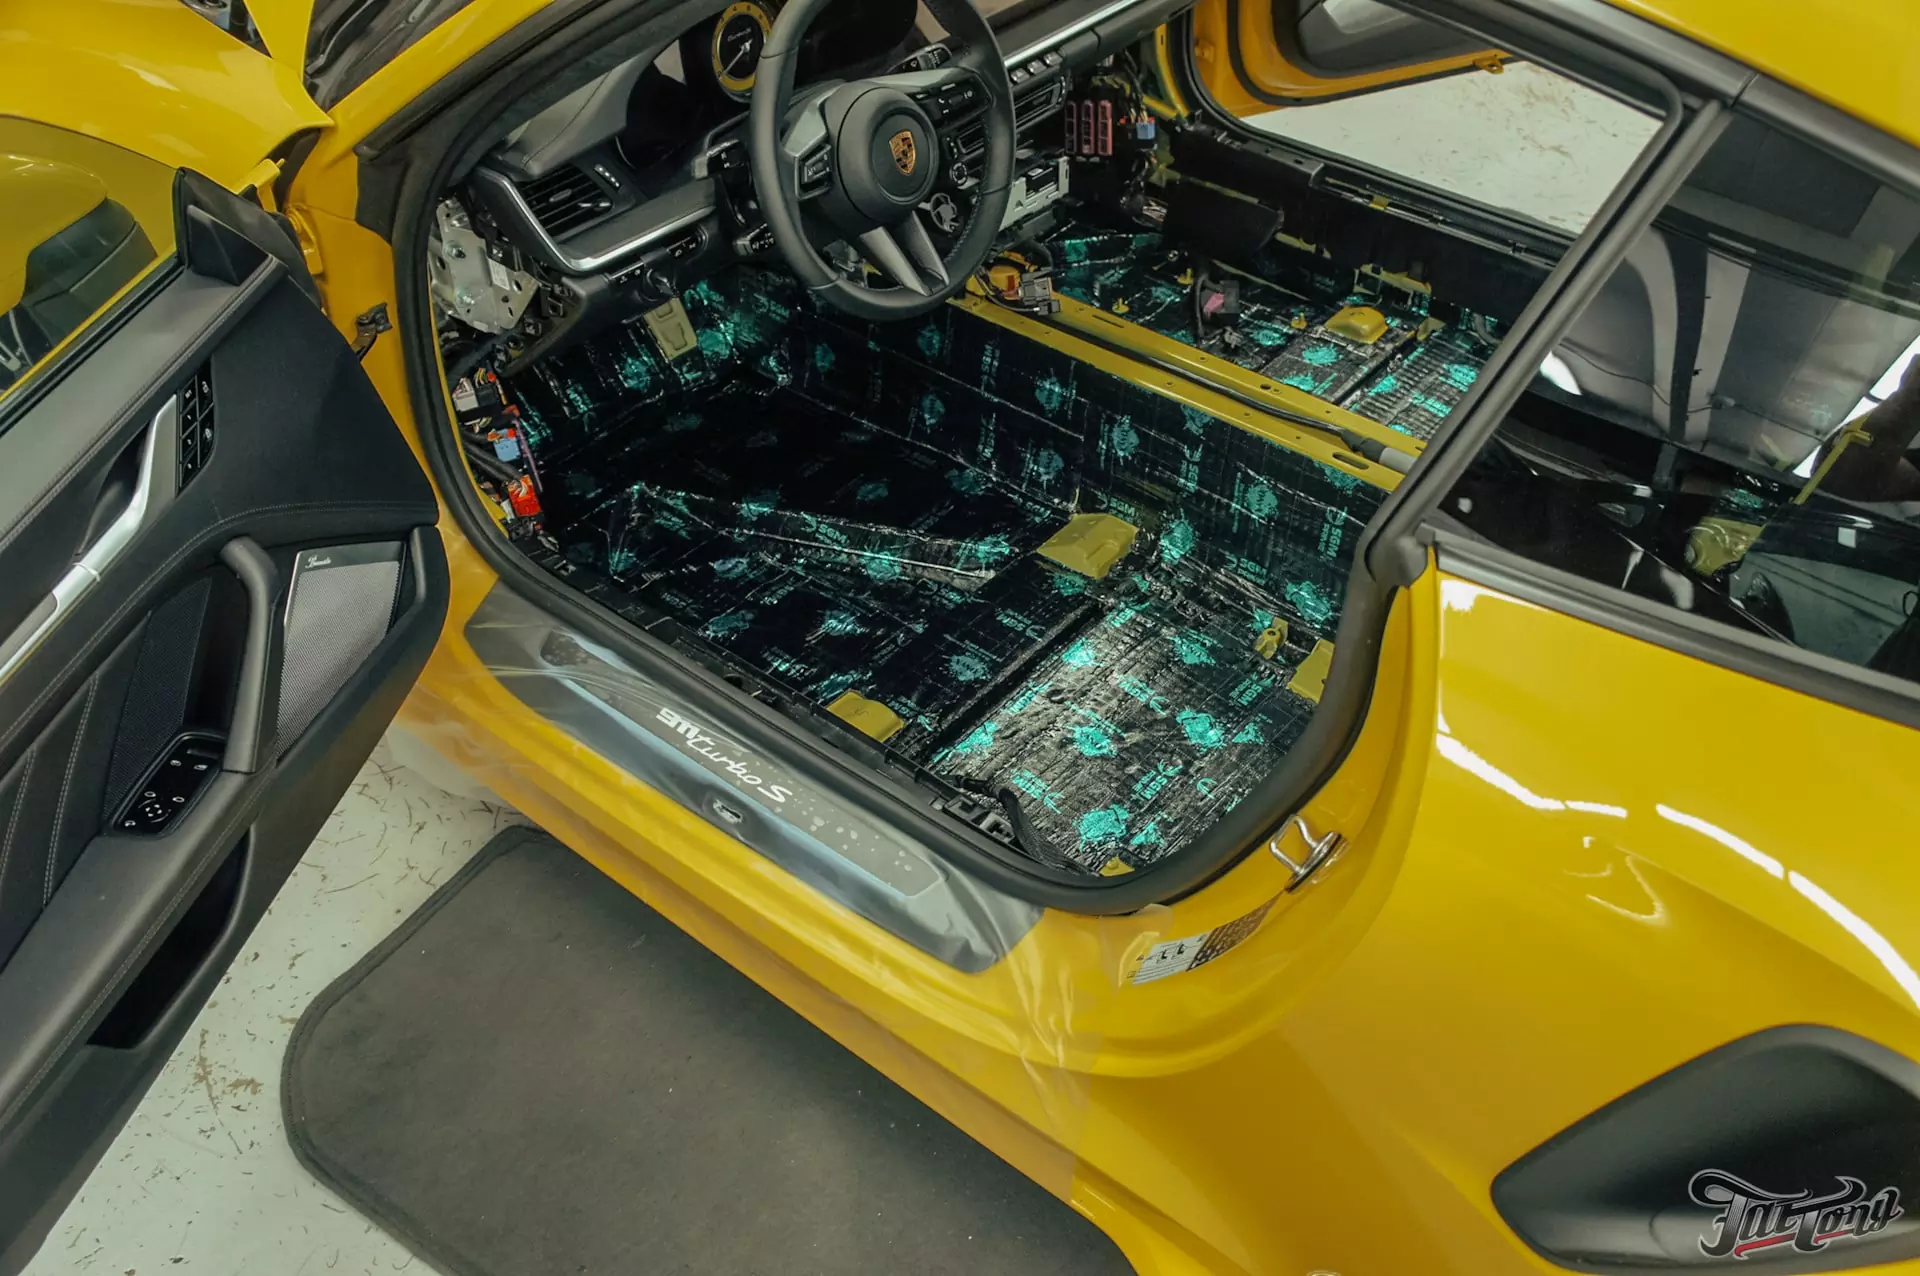 Porsche 911 Turbo S. Шумоизоляция салона. Установка видеорегистратора BlackVue. Окрас ключа в цвет кузова.